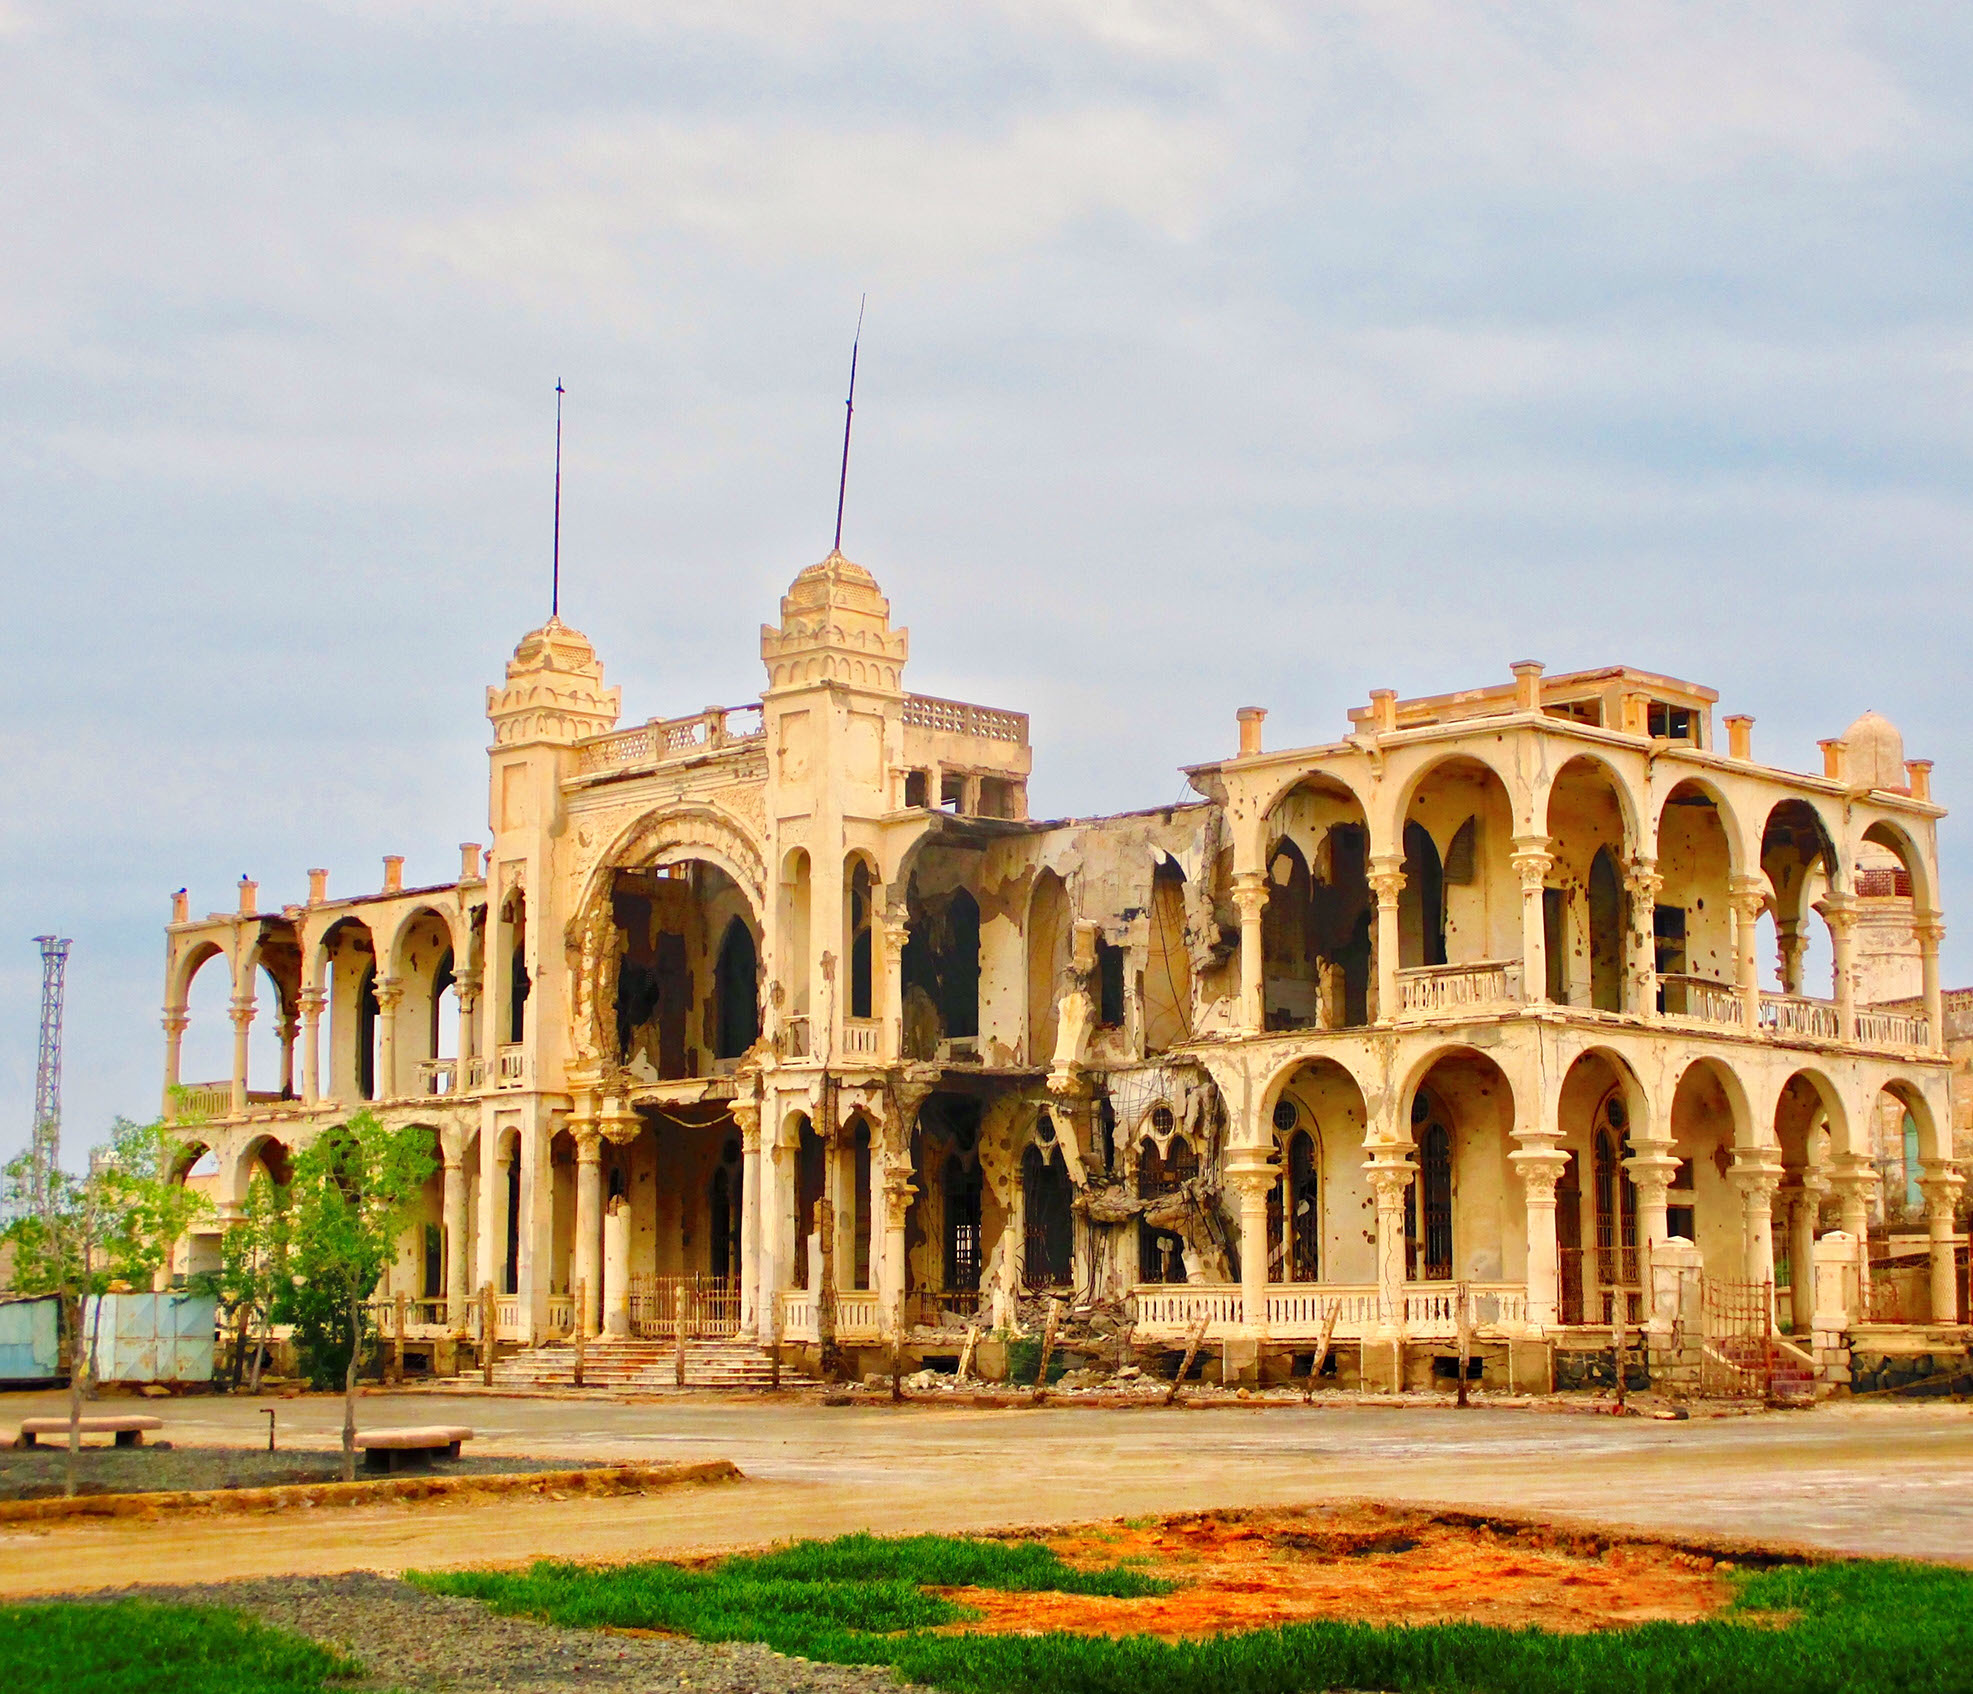 The ruins of former bank "Banca d'Italia" in Massawa, Eritrea.